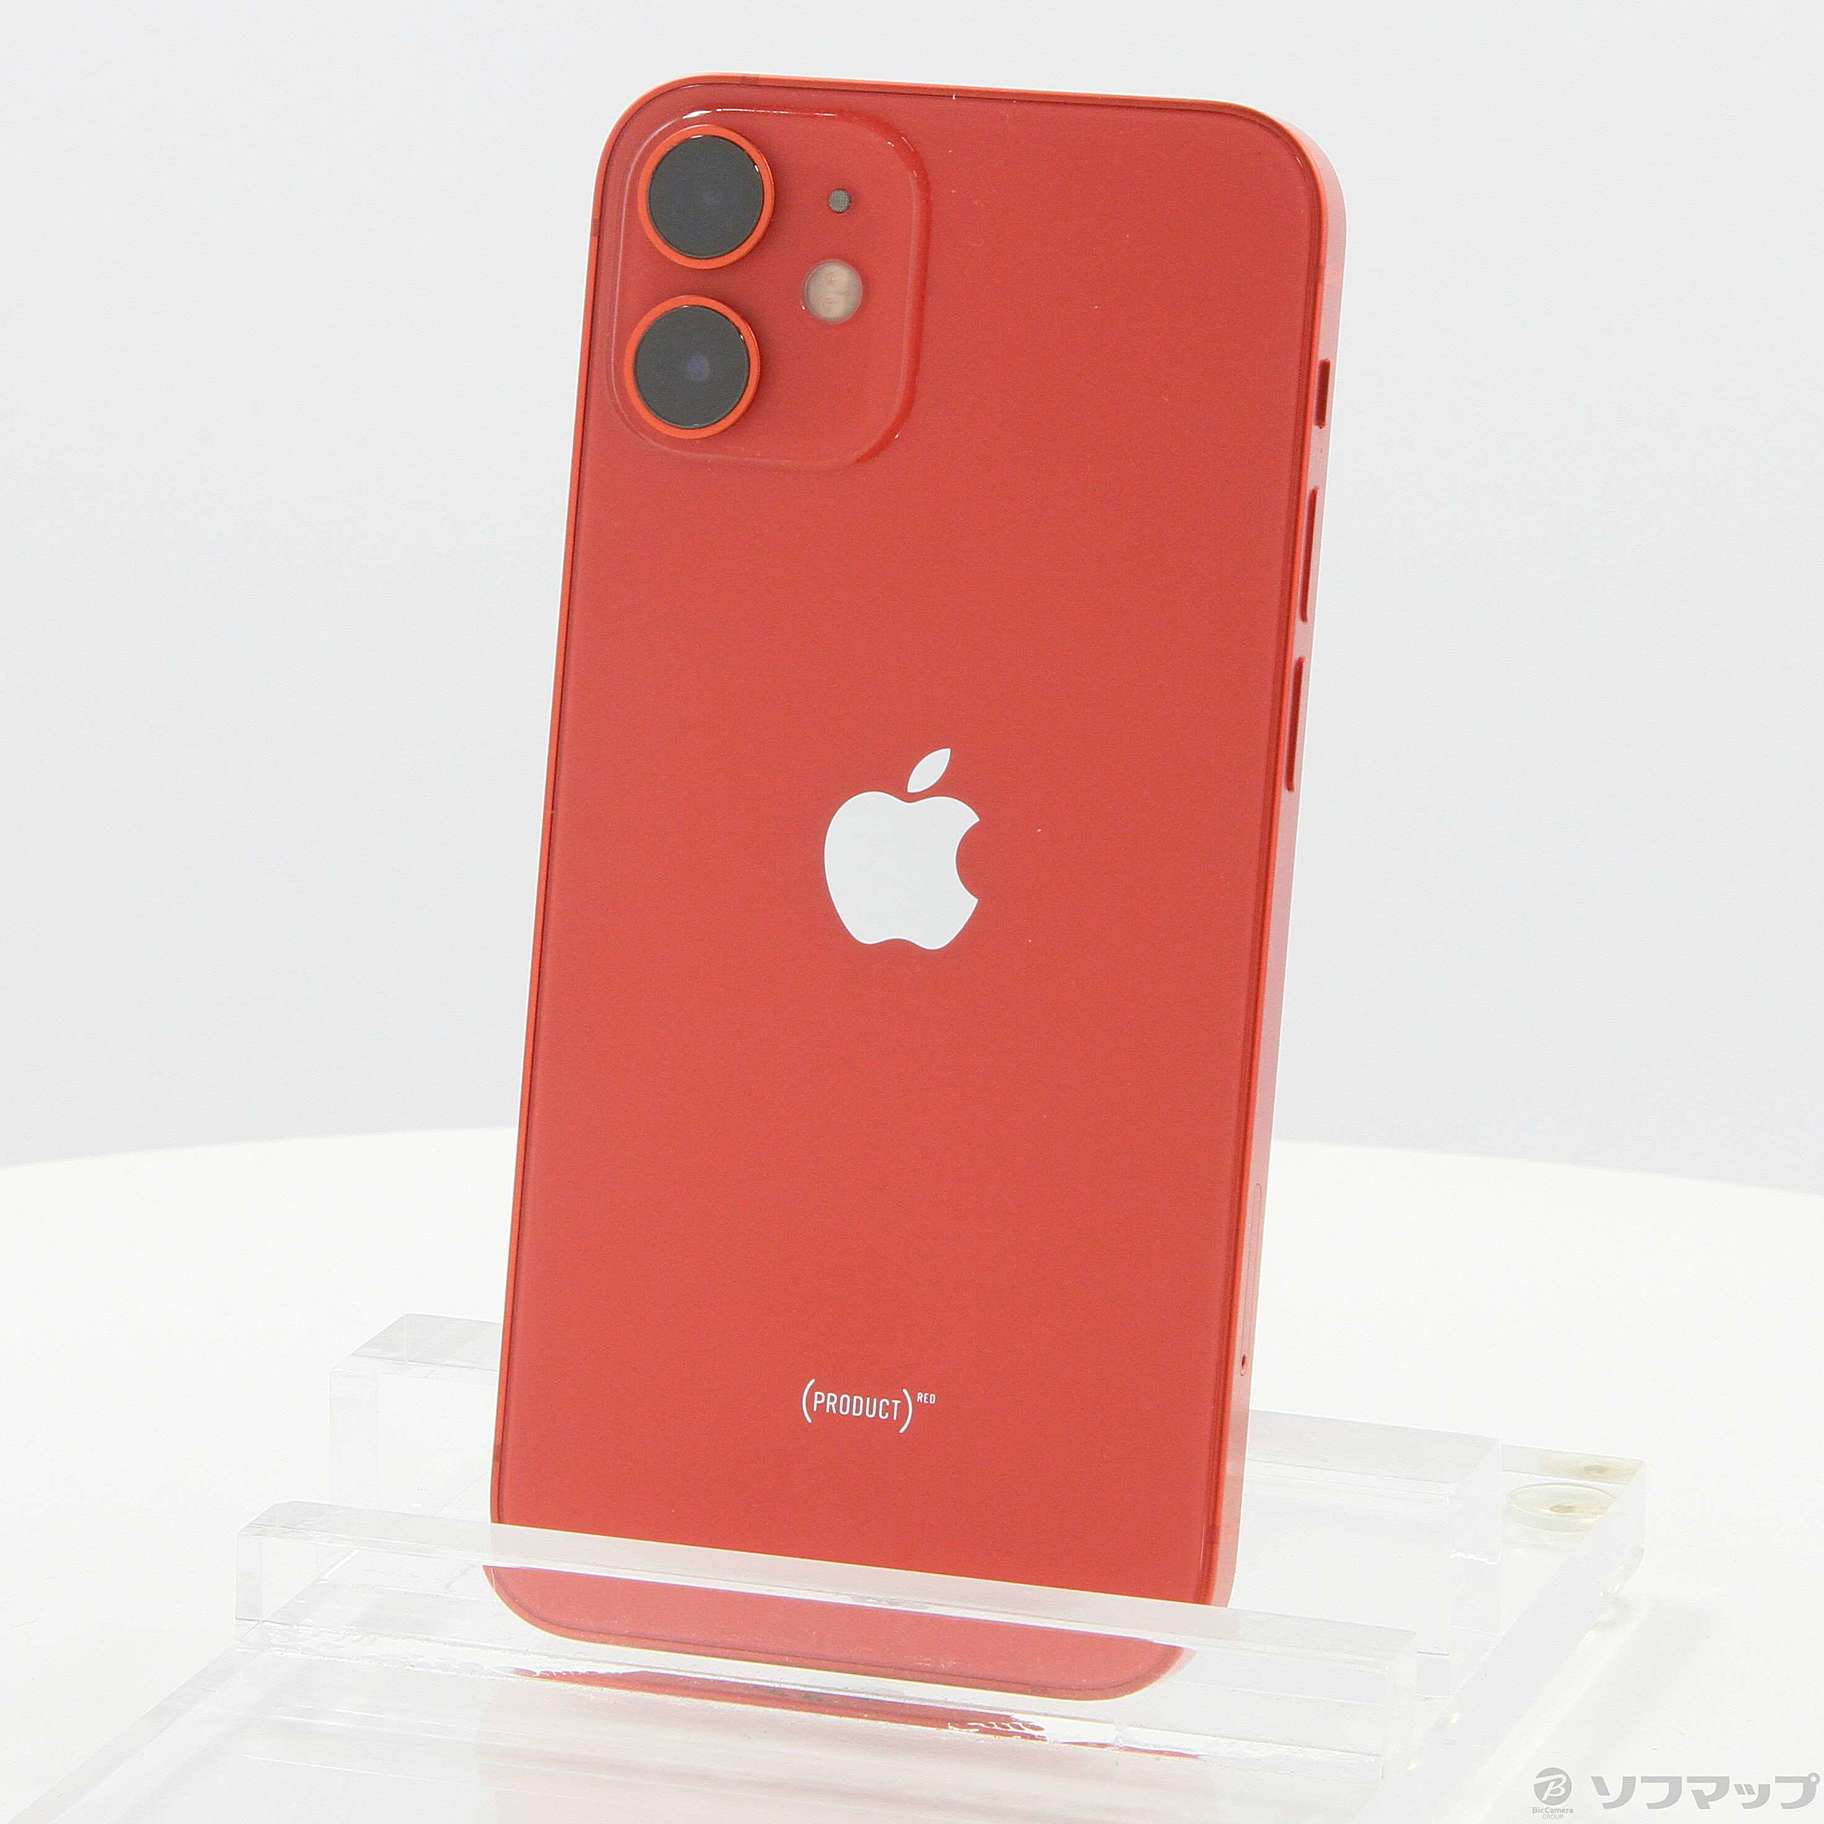 86%iPhone 12 mini Product(RED) レッド SIMフリー